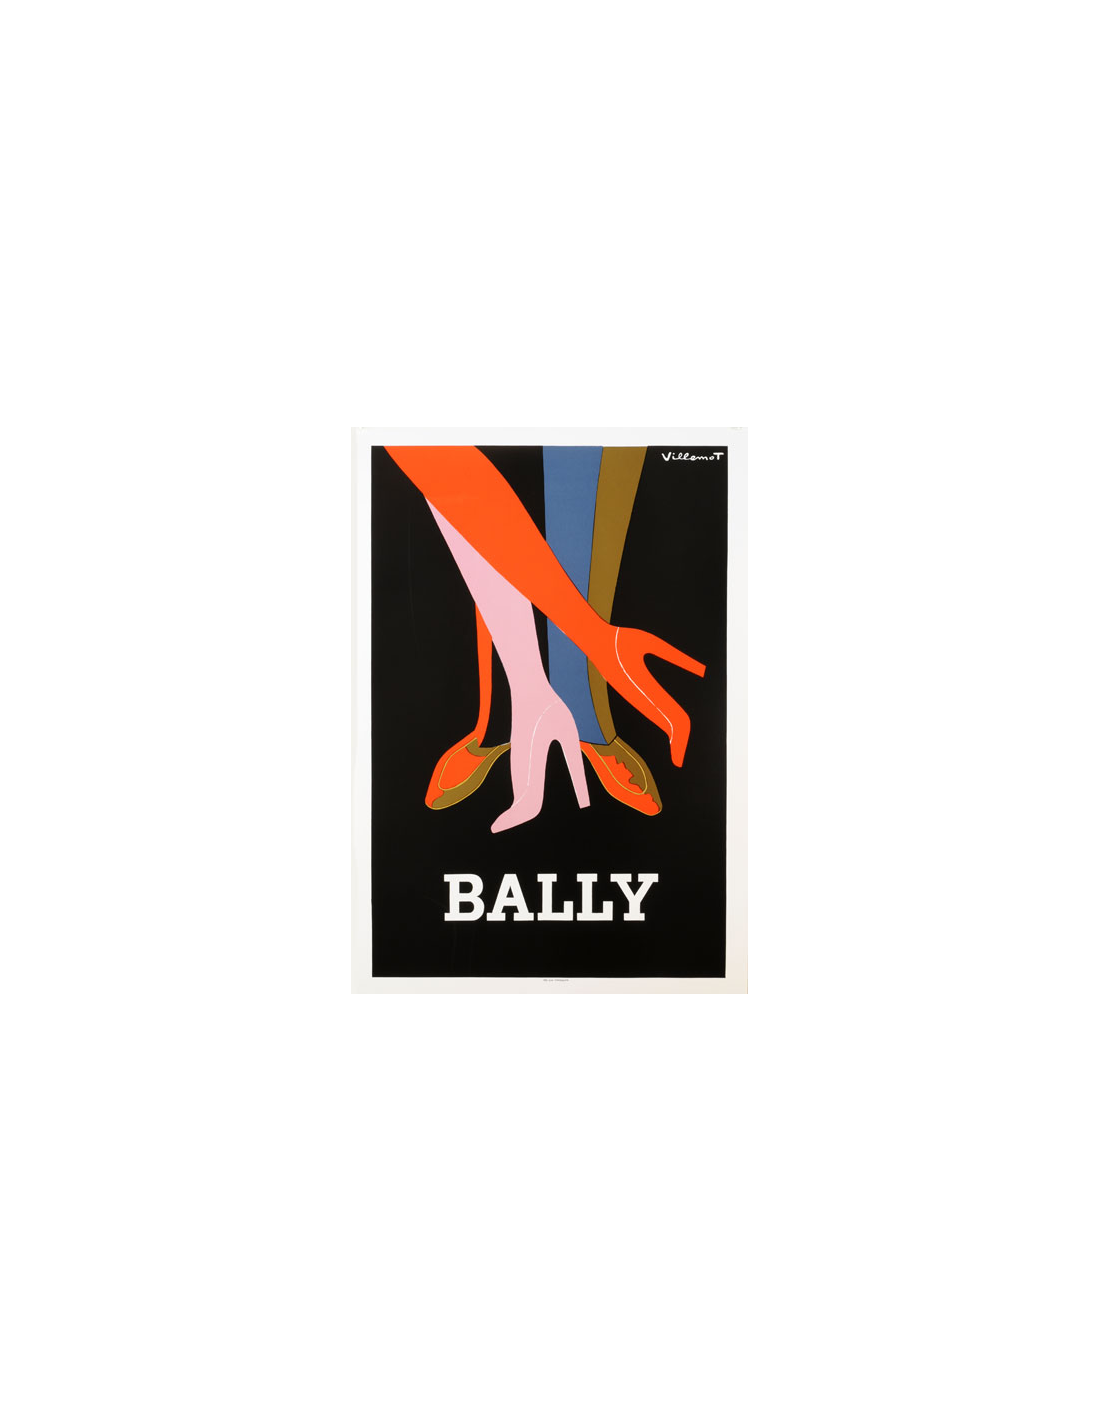 Bally Shoes by Bernard Villemot 1979 original vintage poster on linen ...